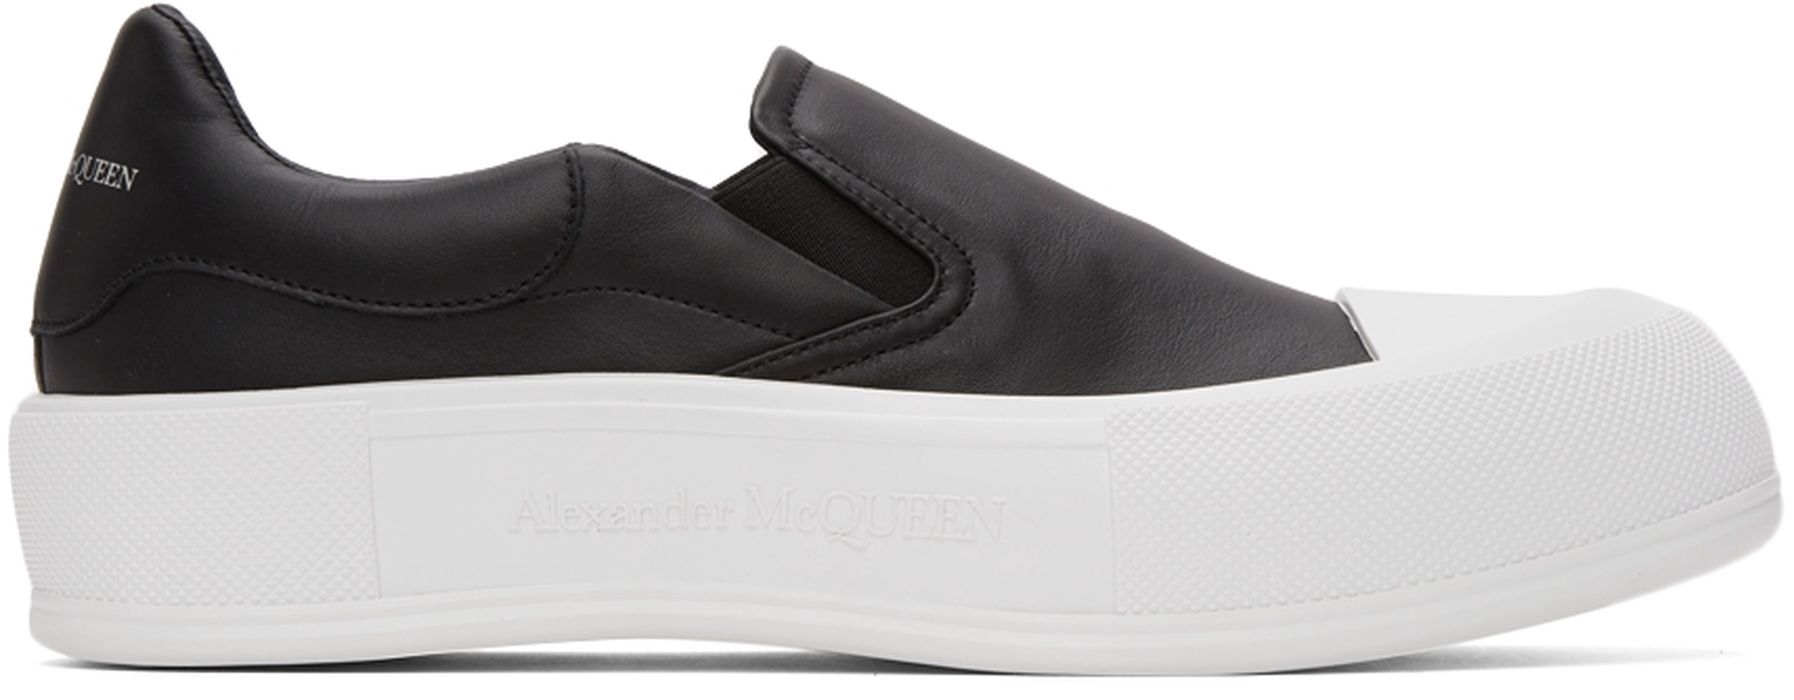 Alexander McQueen Black & White Plimsoll Slip-On Sneakers